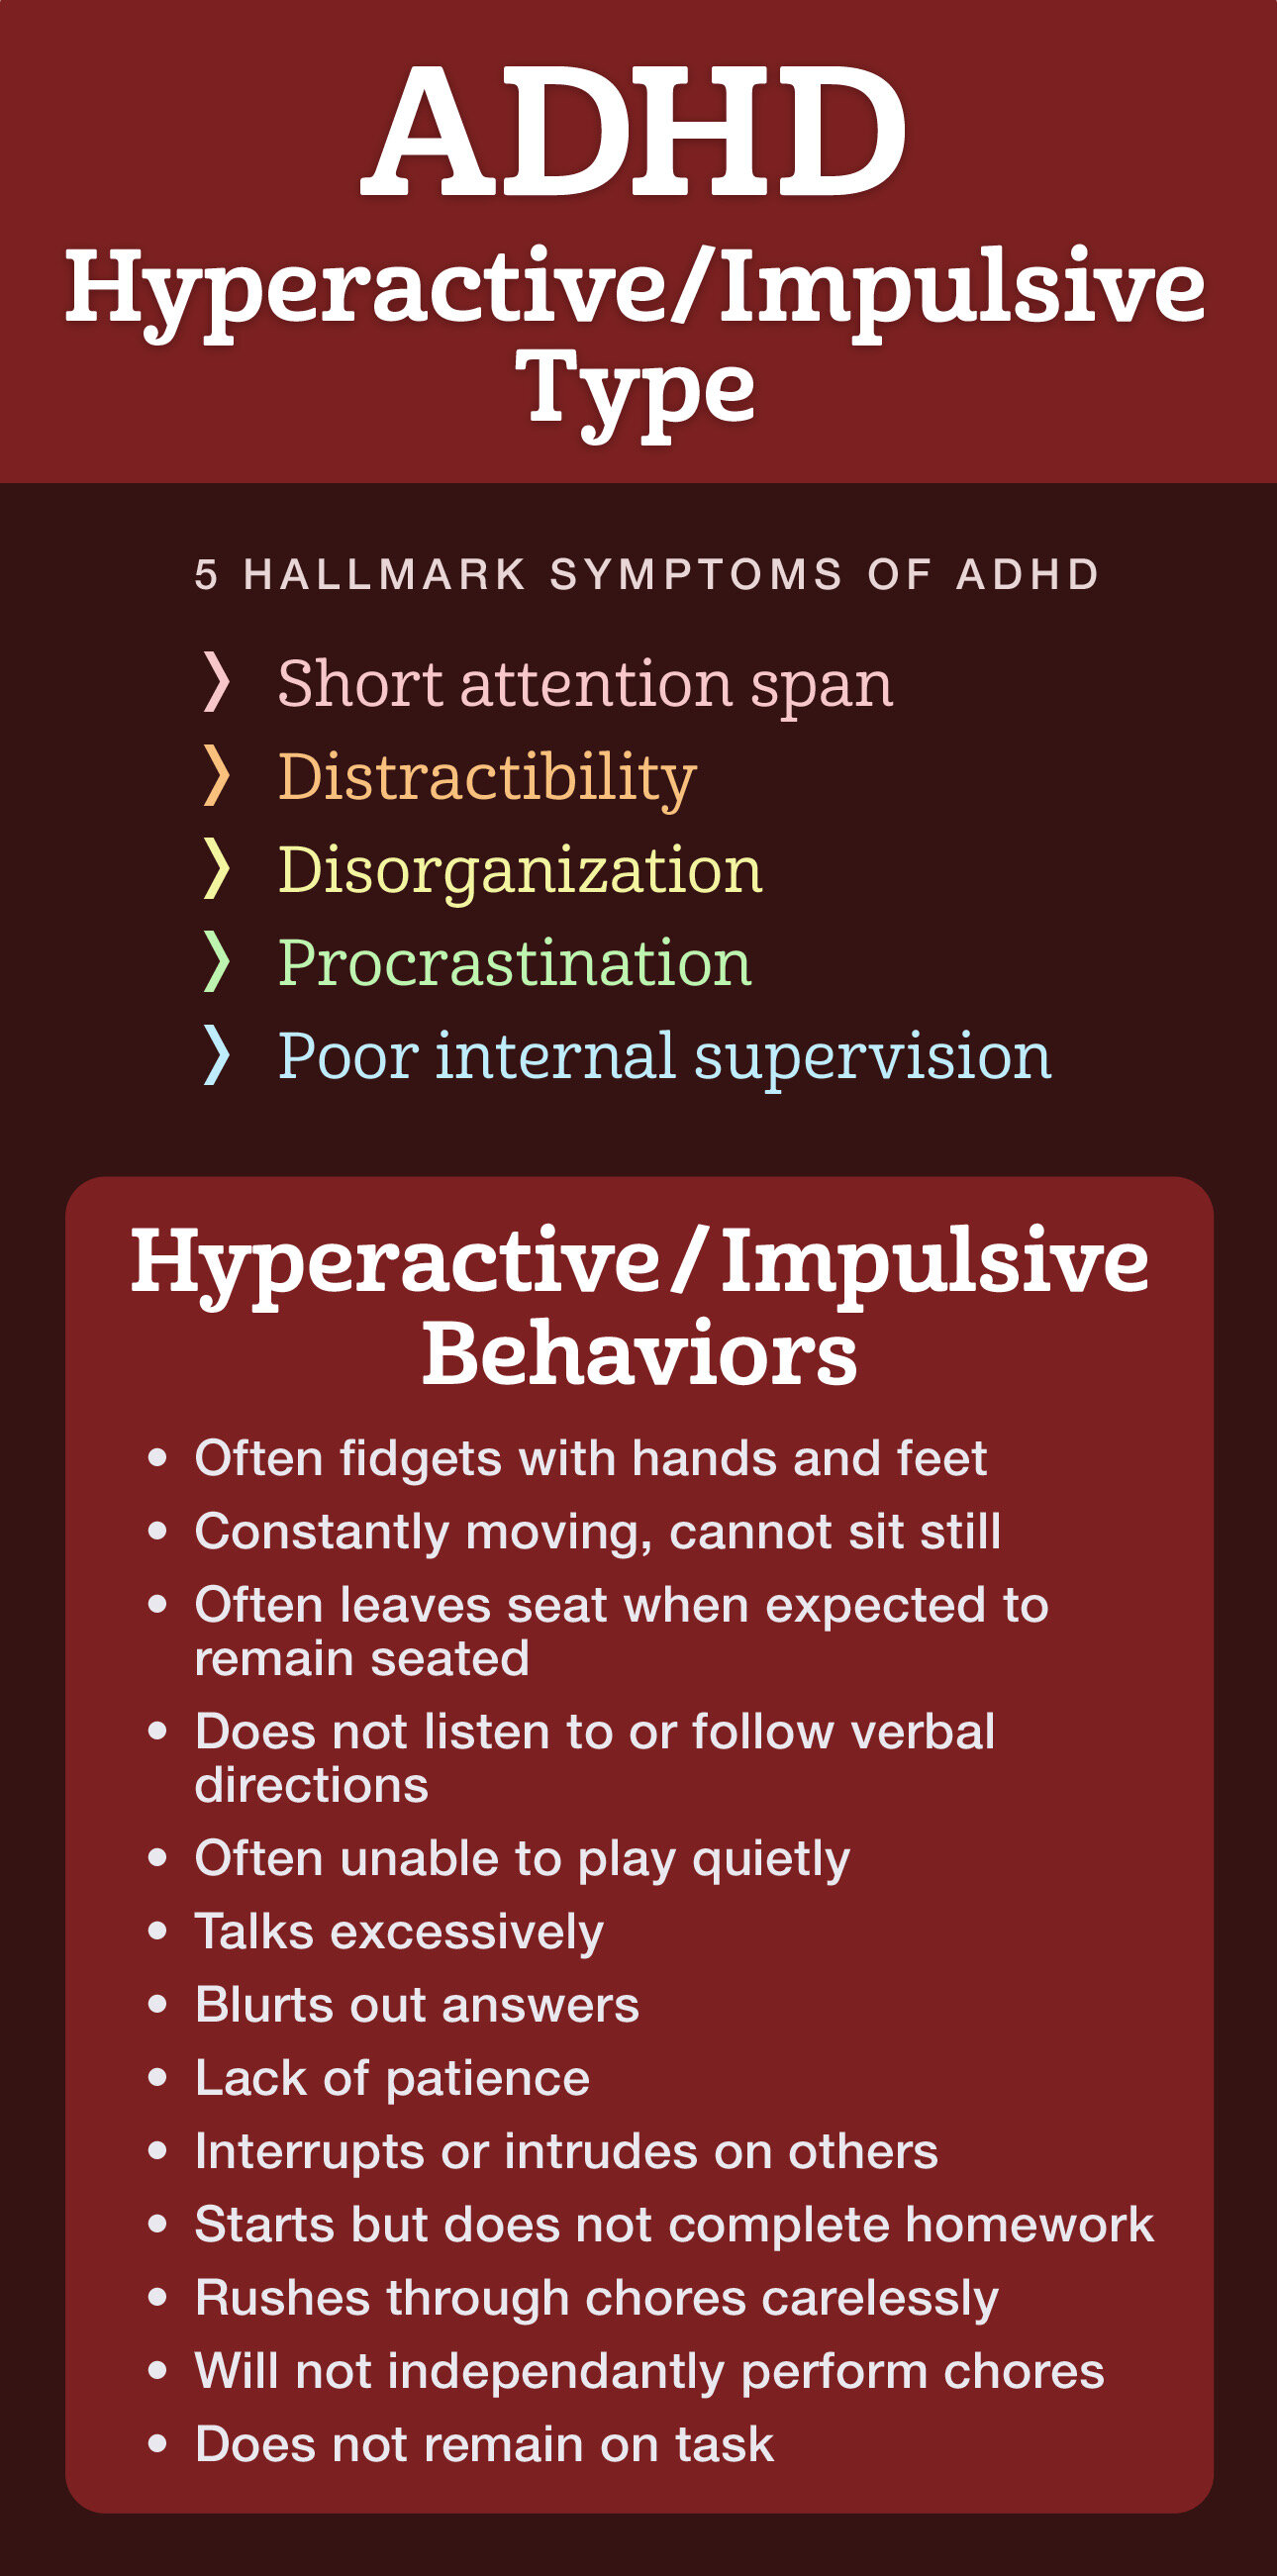 adhd-hyperactive-impulsive-type-symptoms-behaviors-add.png